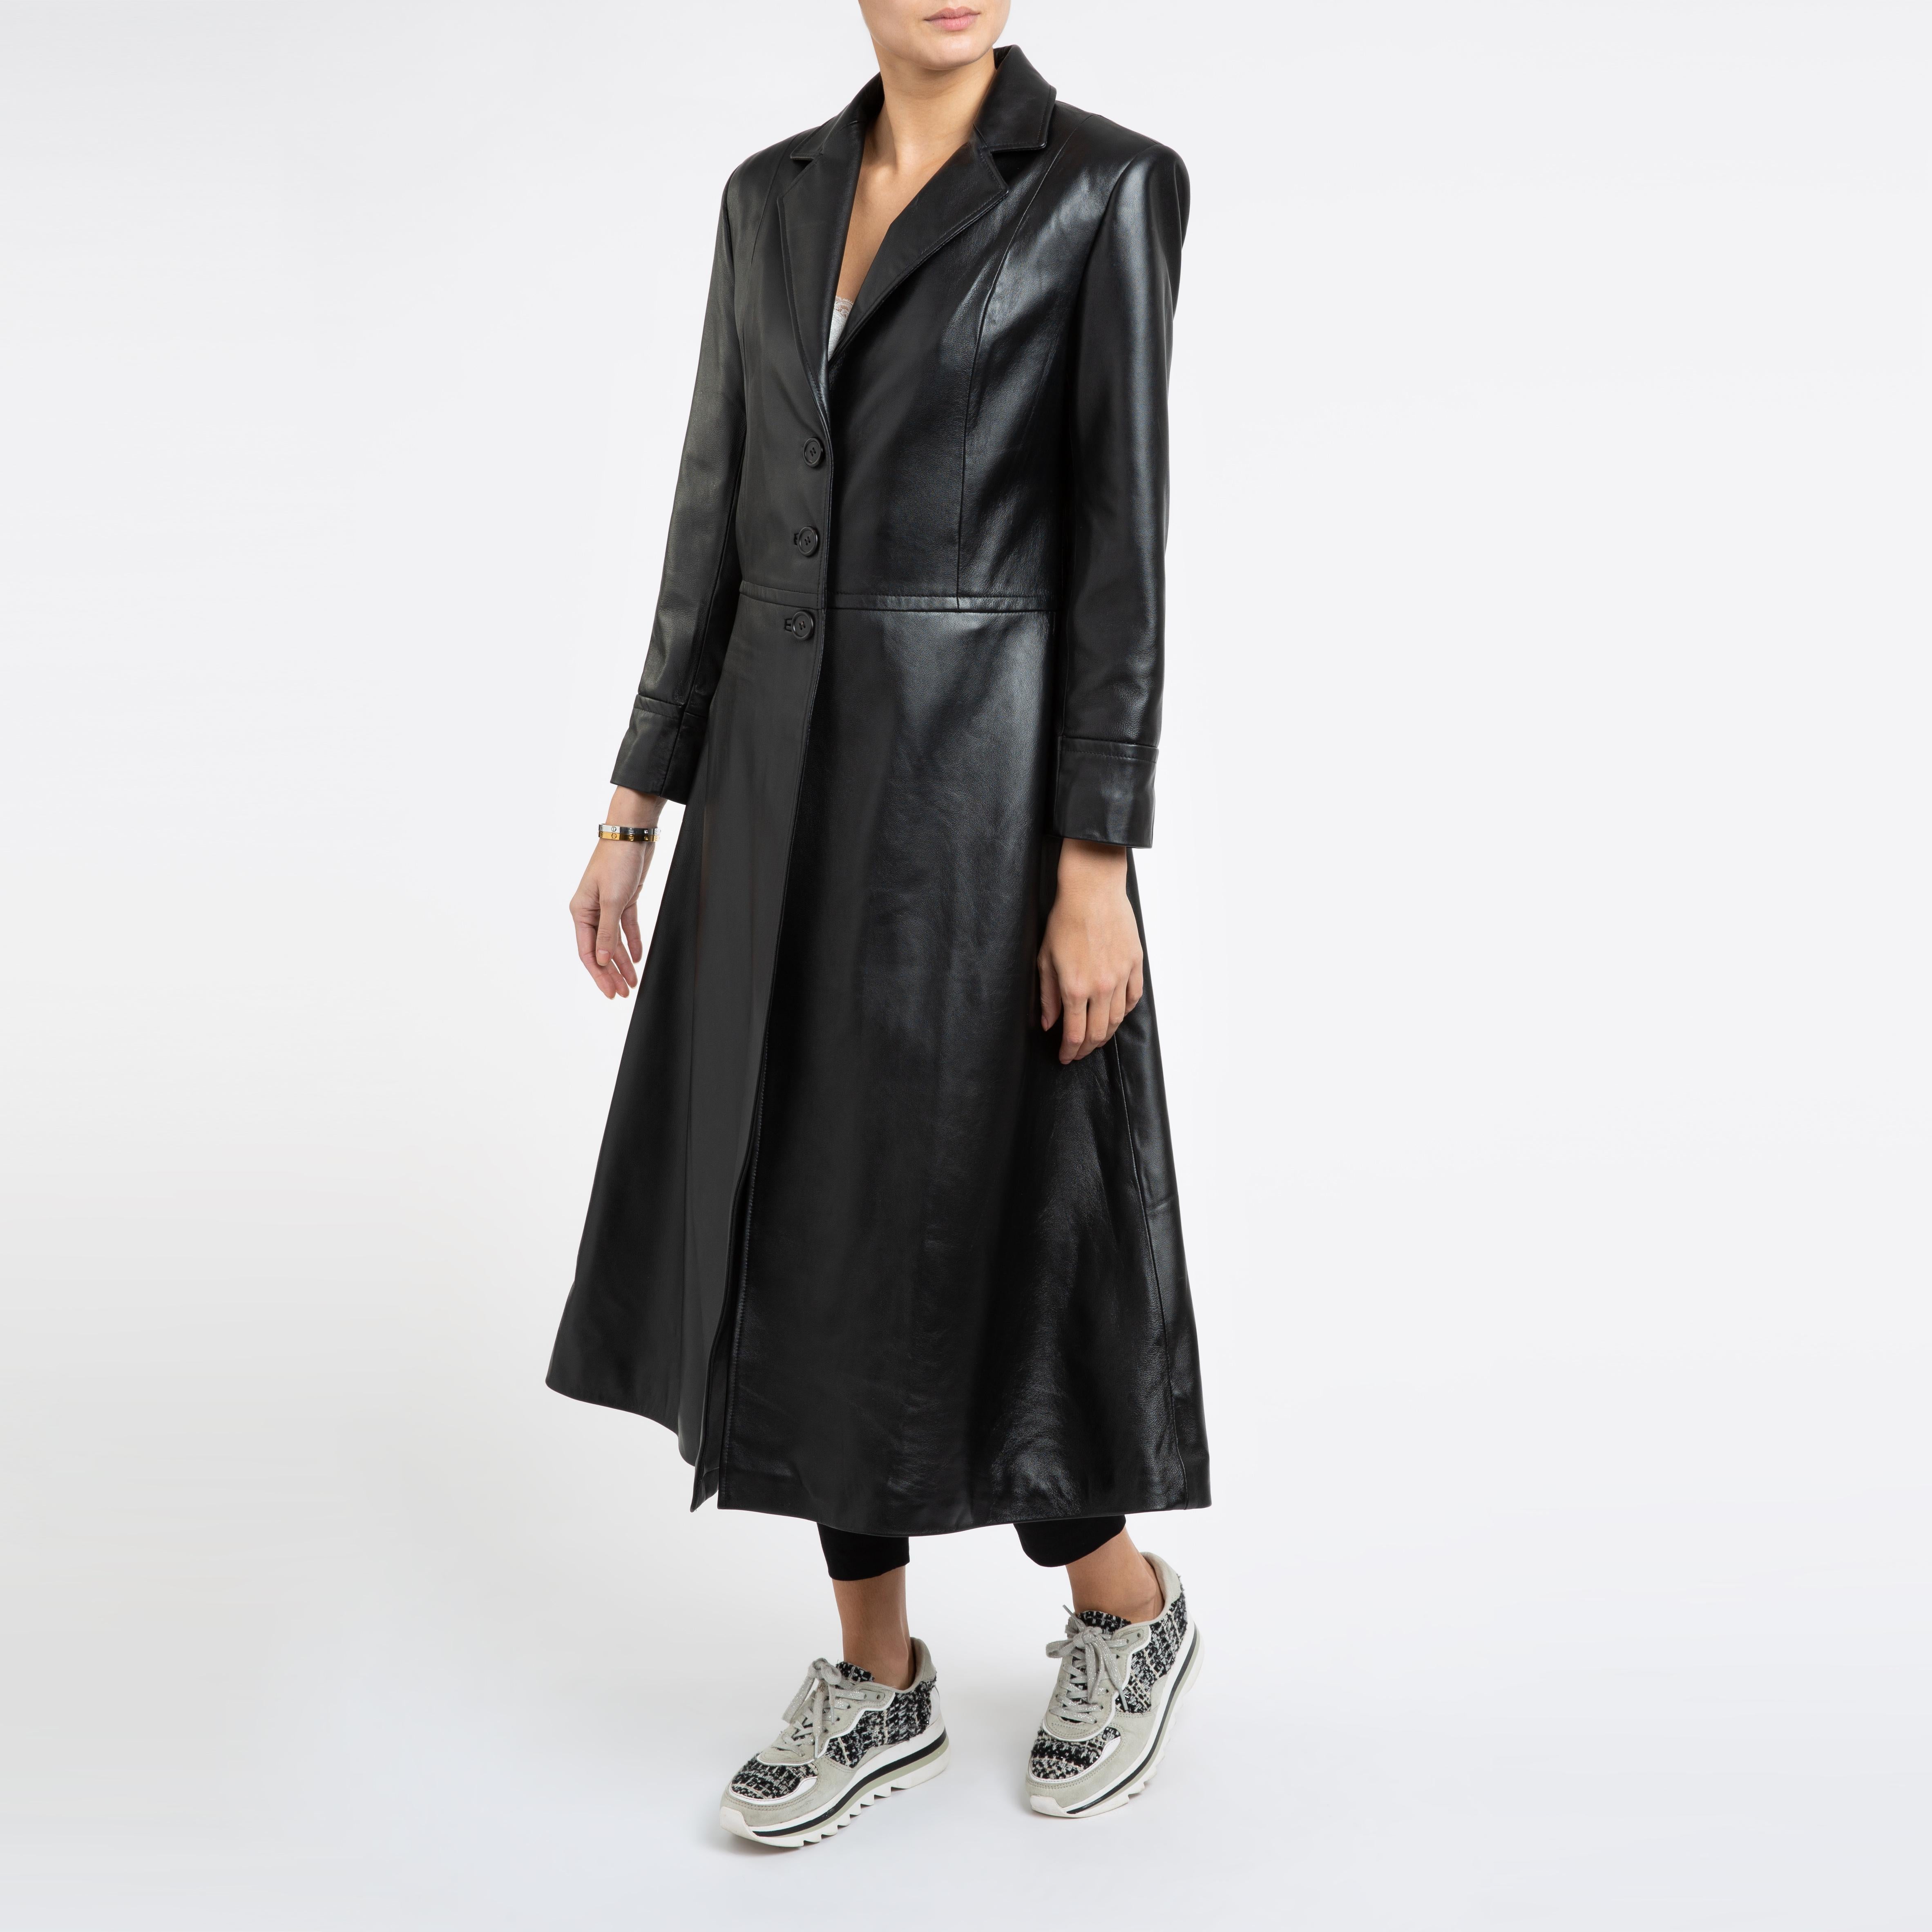 Verheyen London Oversize 70's Leather Trench Coat in Black - Size uk 8 6